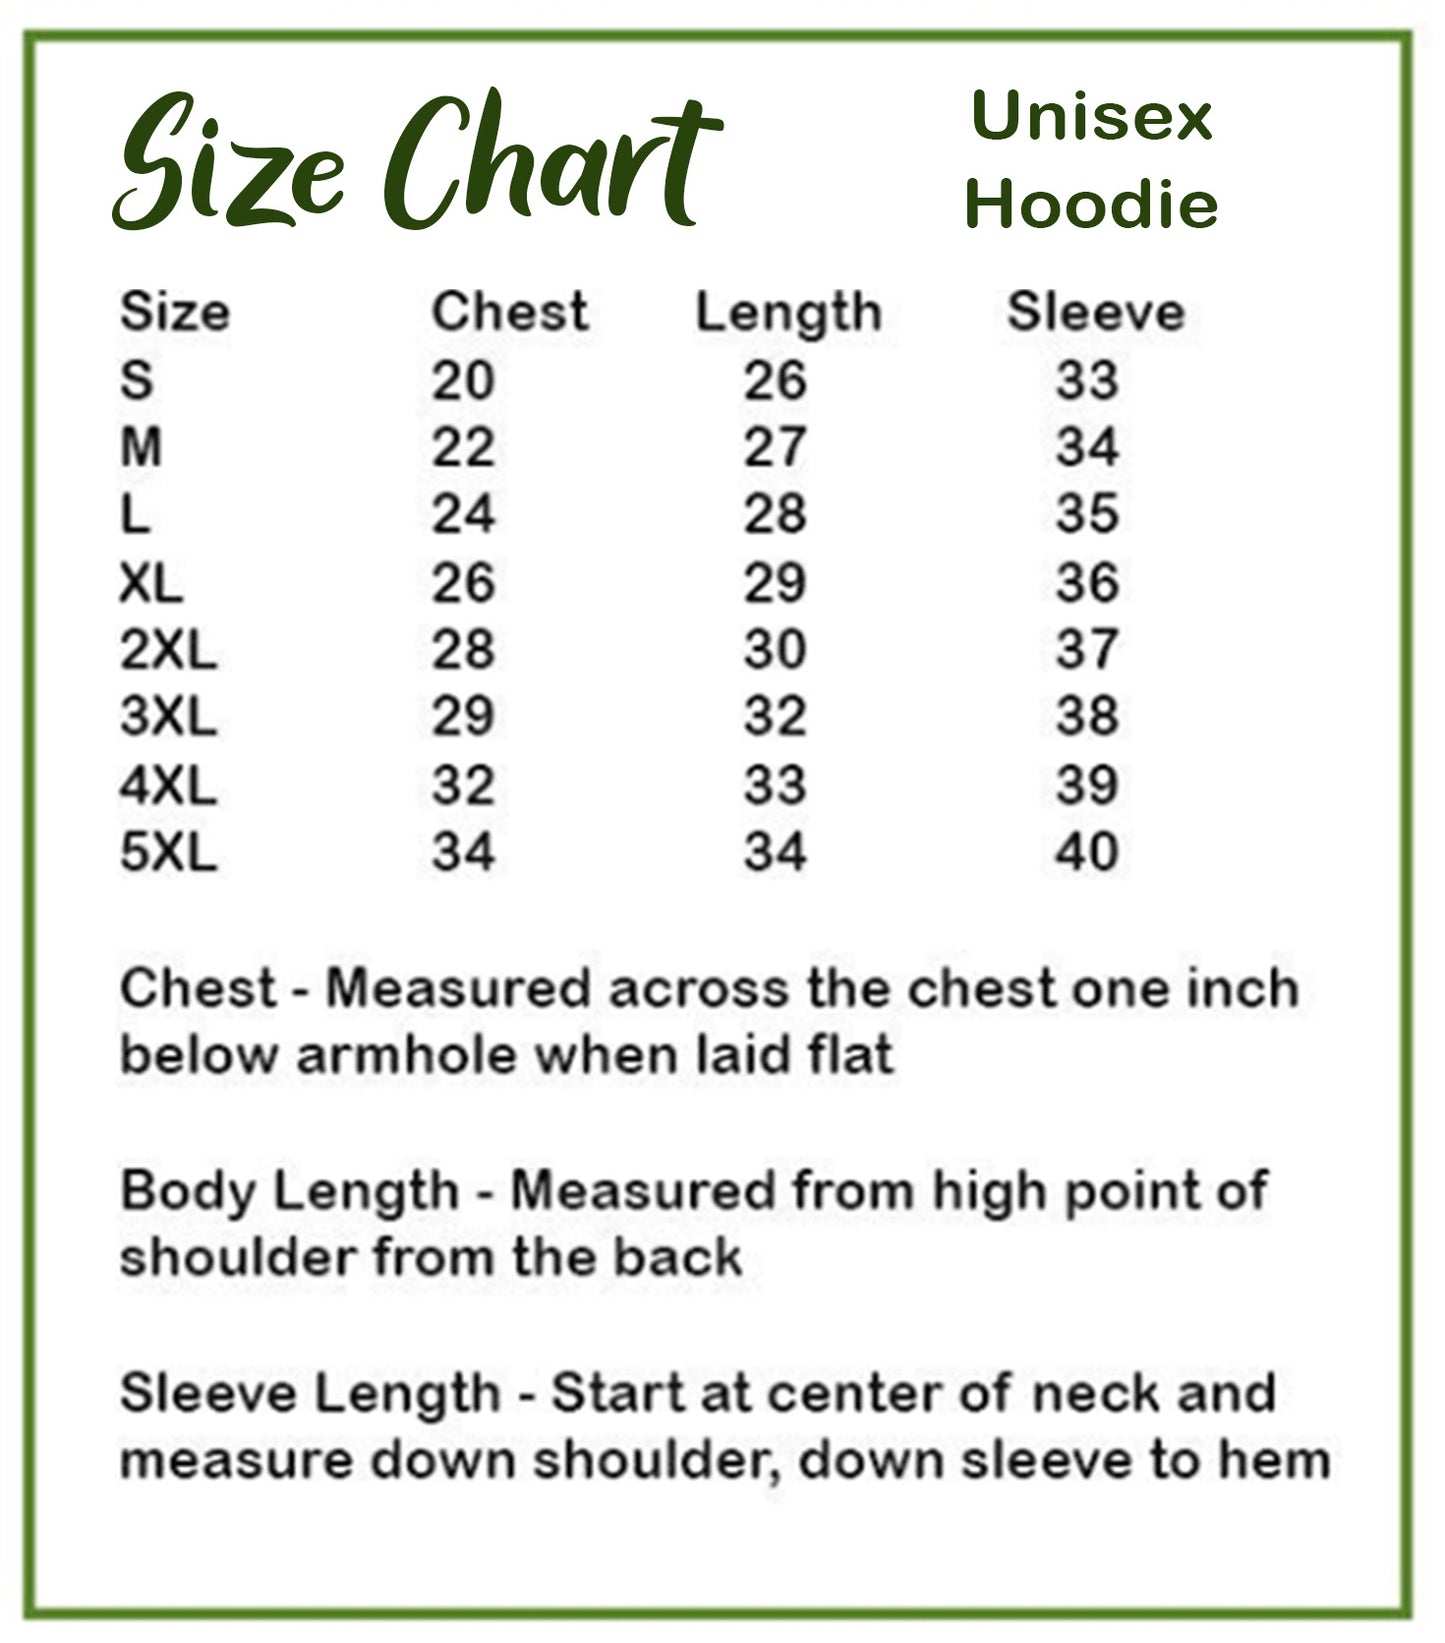 Snail Moon - T-shirts, Hoodies and Sweatshirts